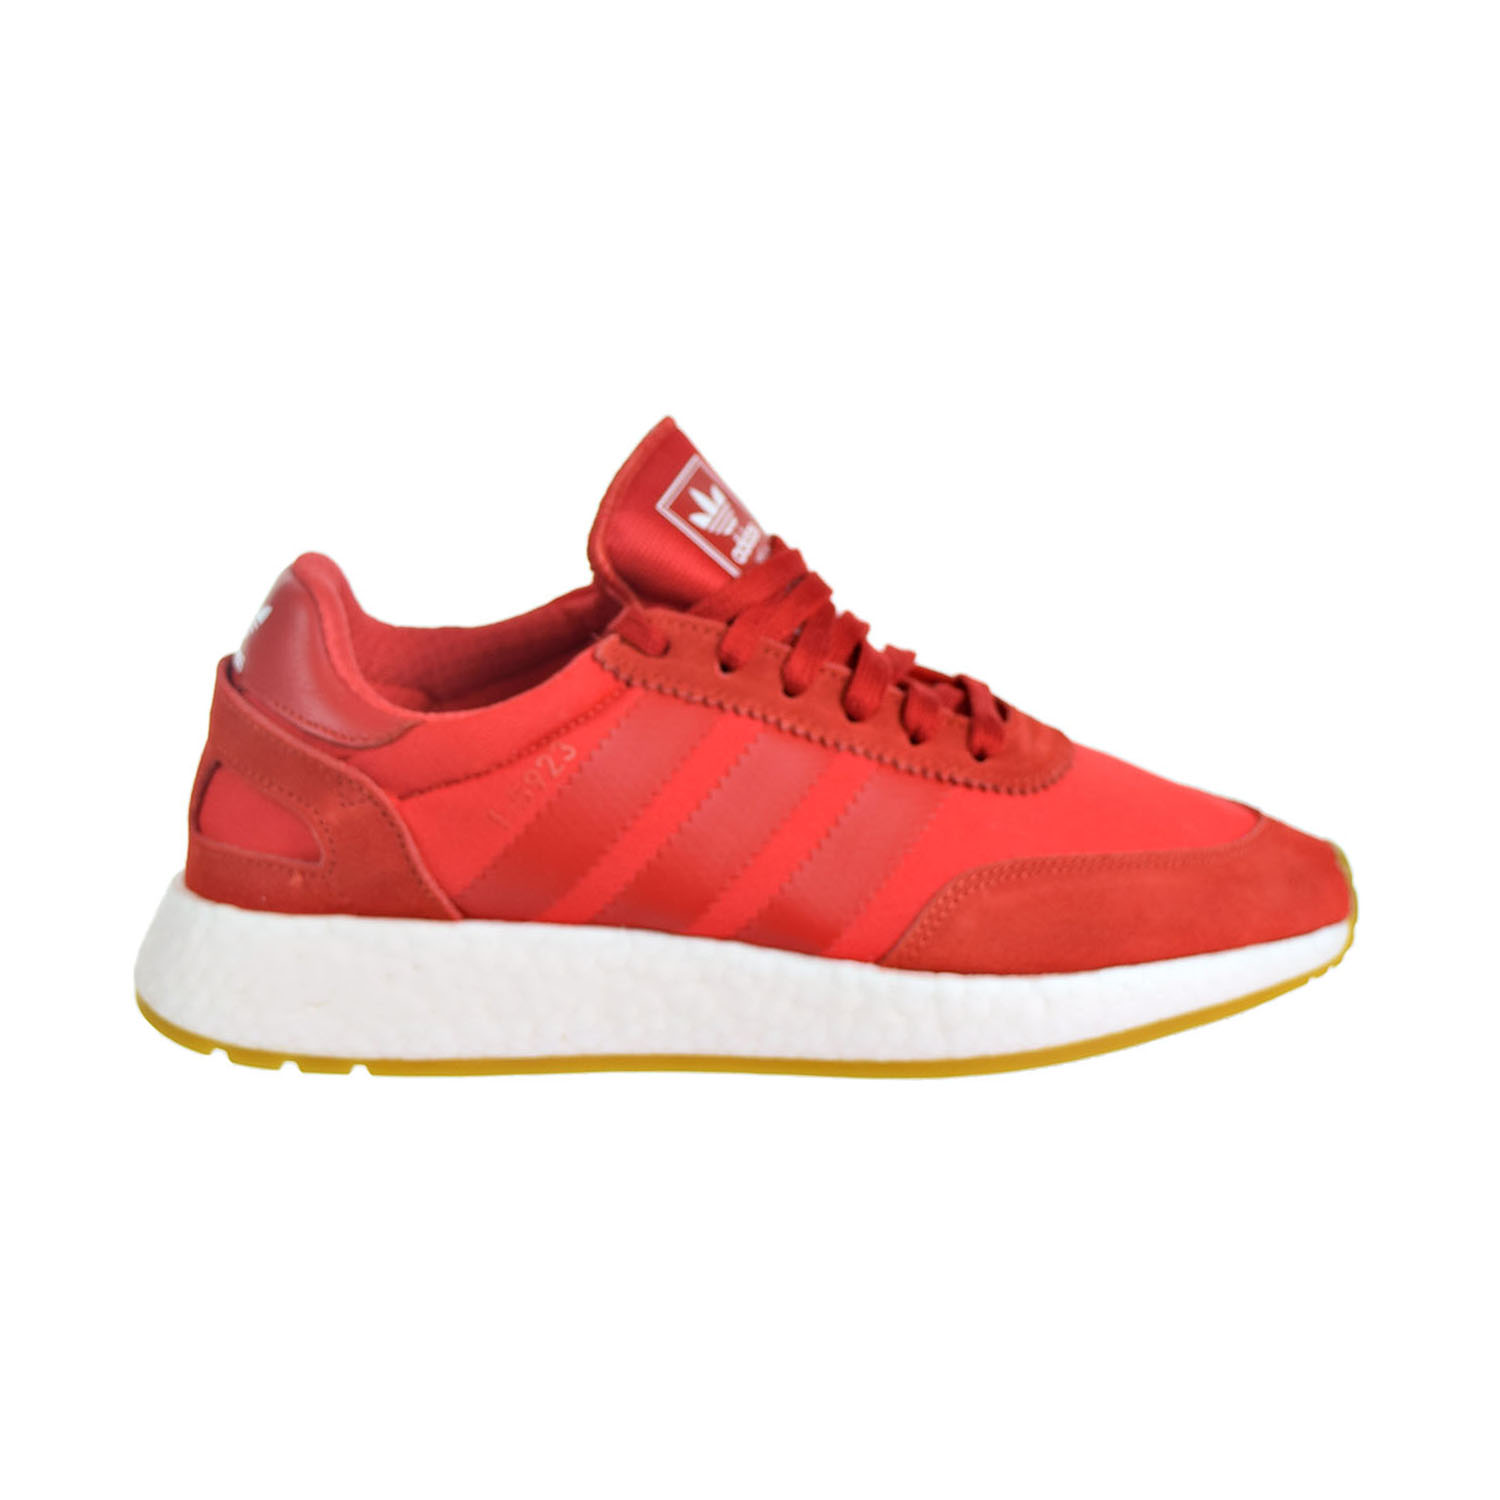 Adidas Originals I-5923 Men's Shoes Red 